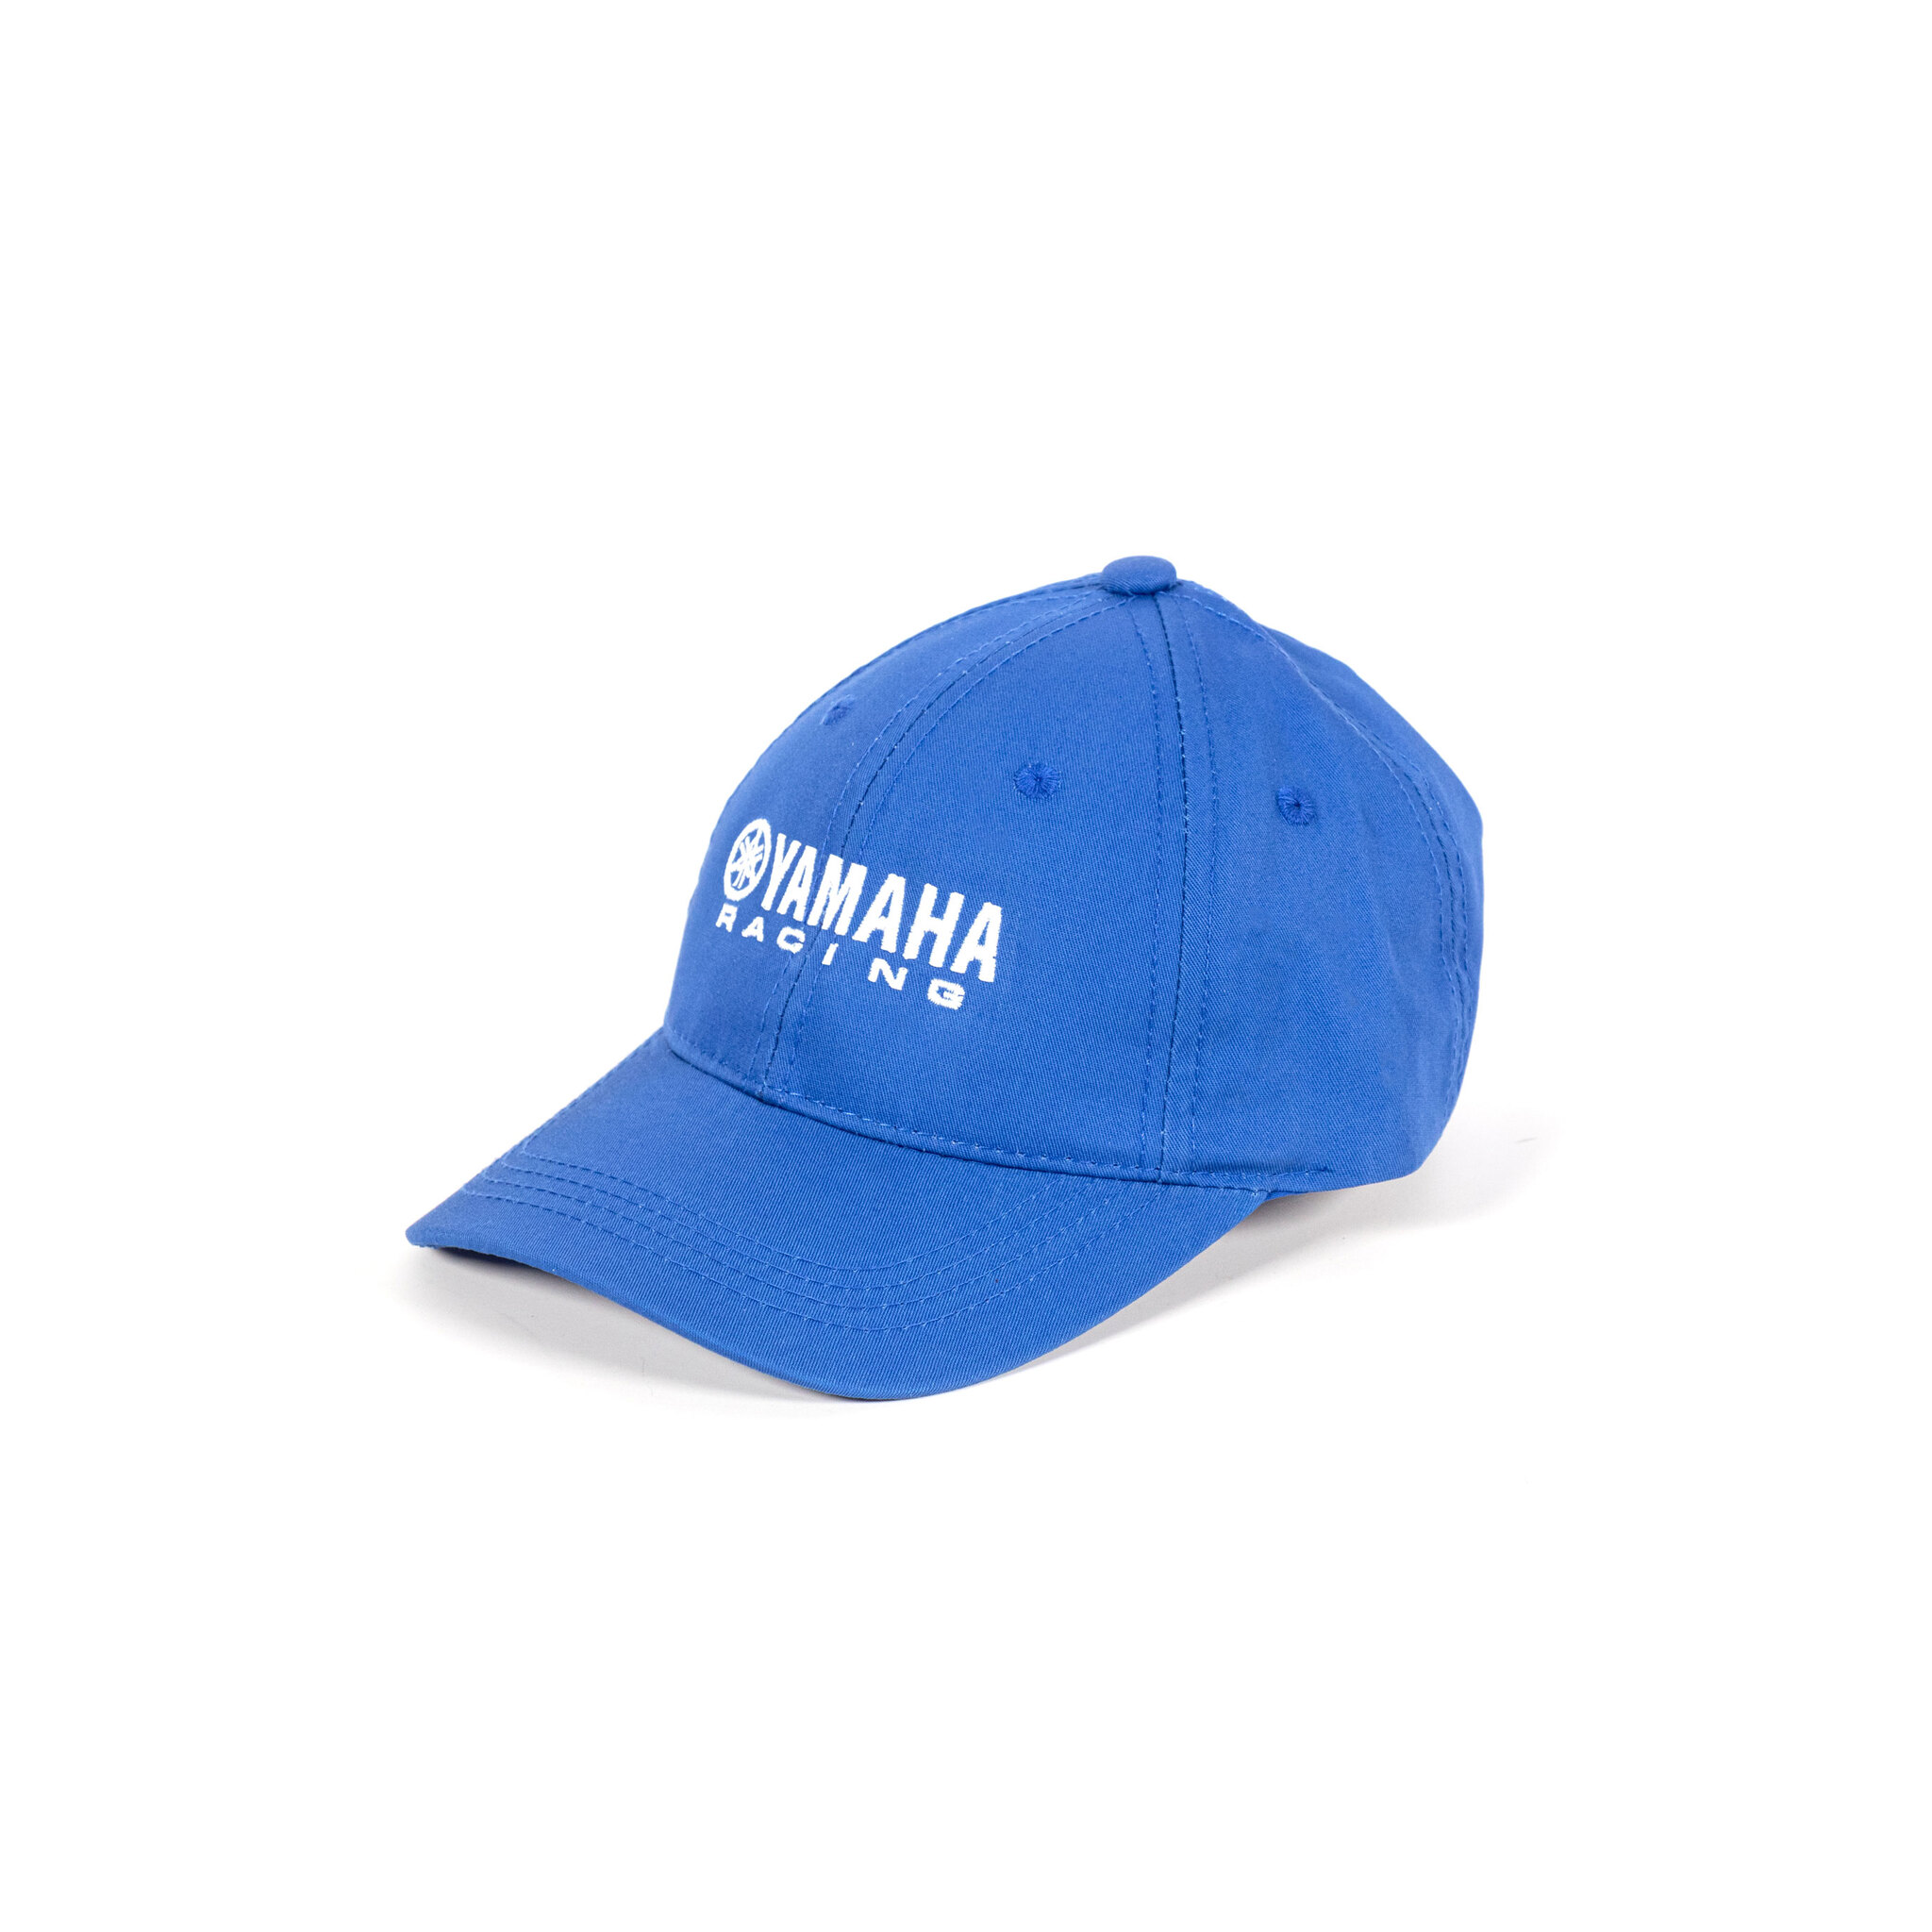 Kid's Yamaha Essential Baseball Cap One size blue